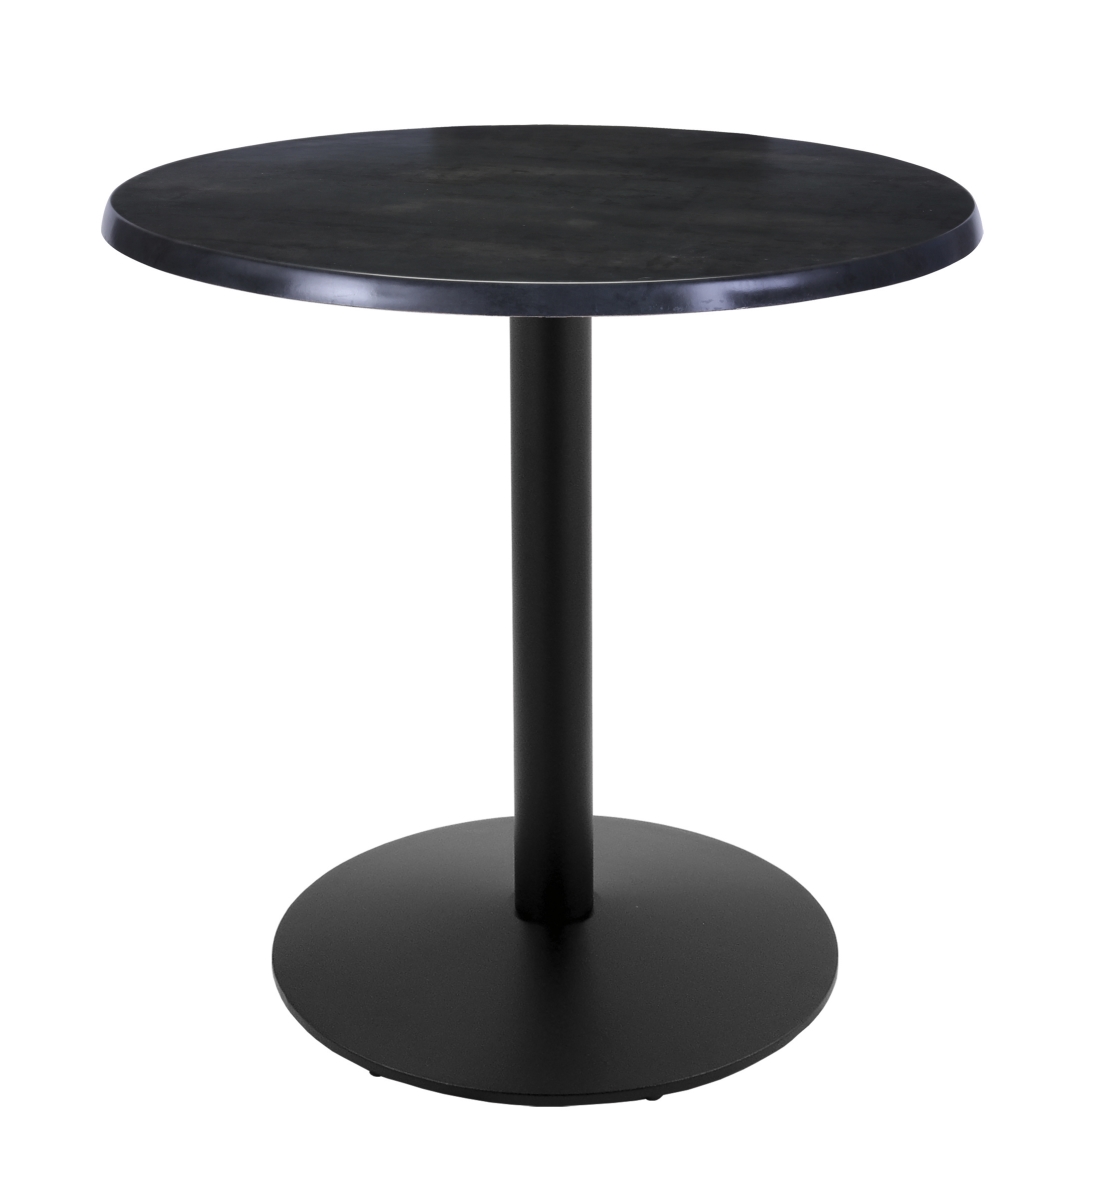 Od214-2236bwod30rblkstl 36 In. Black Table With 30 In. Diameter Indoor & Outdoor Black Steel Round Top